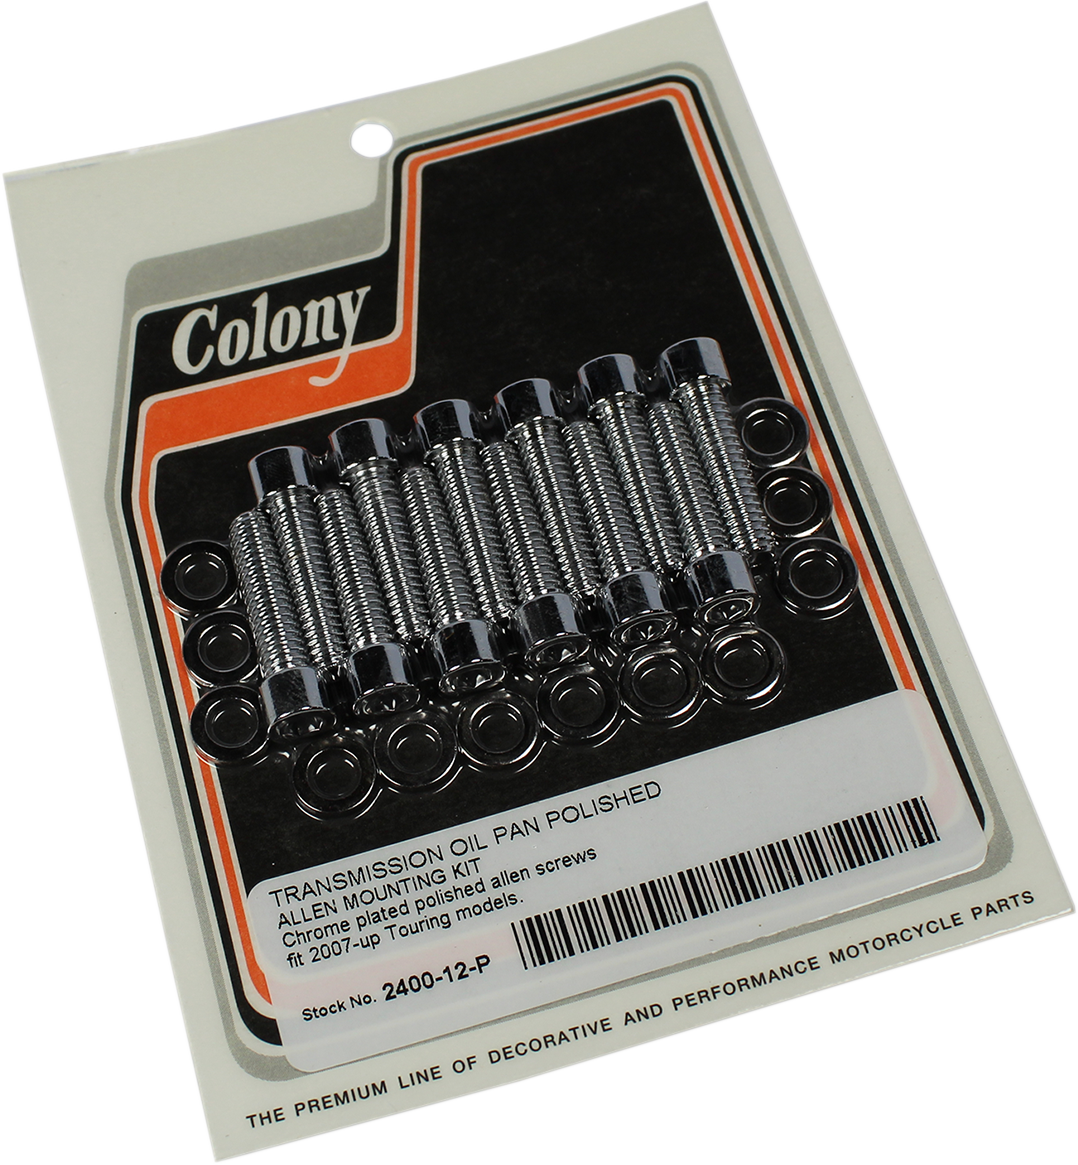 2401-1127 - COLONY Transmission Pan Screw Kit 2400-12-P